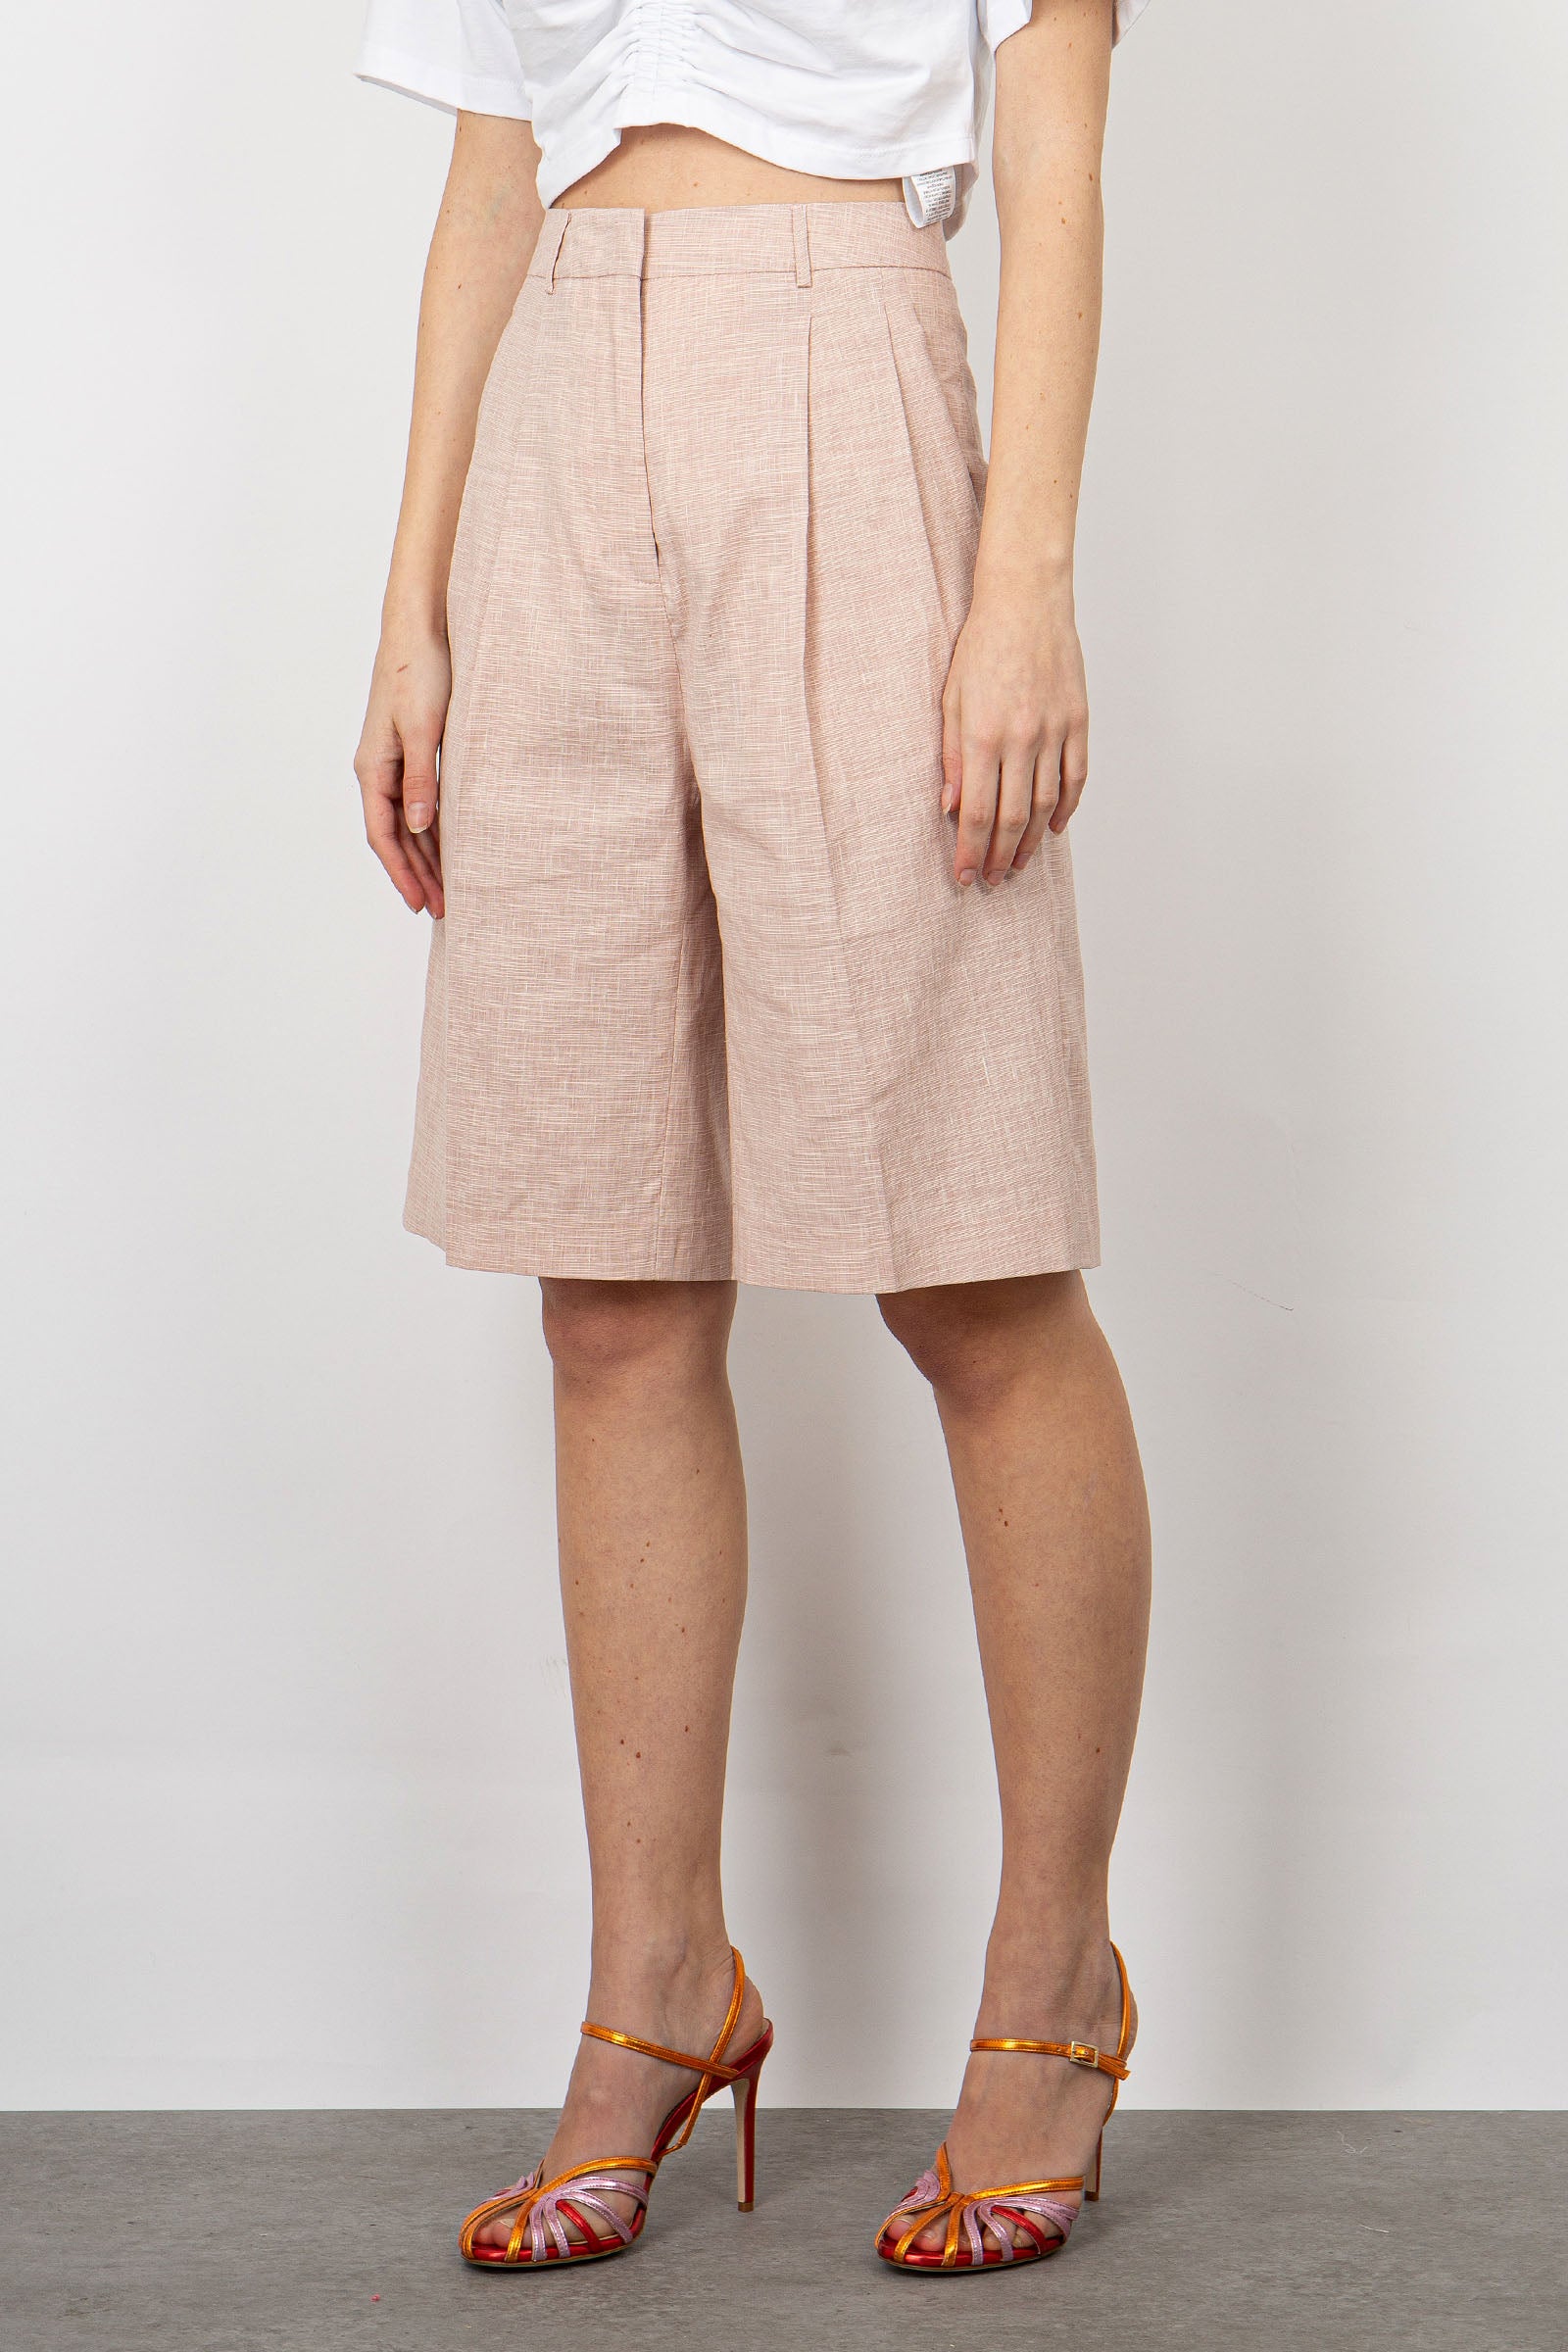 Semicouture Ellen Silk Bermuda Shorts in Light Pink - 1